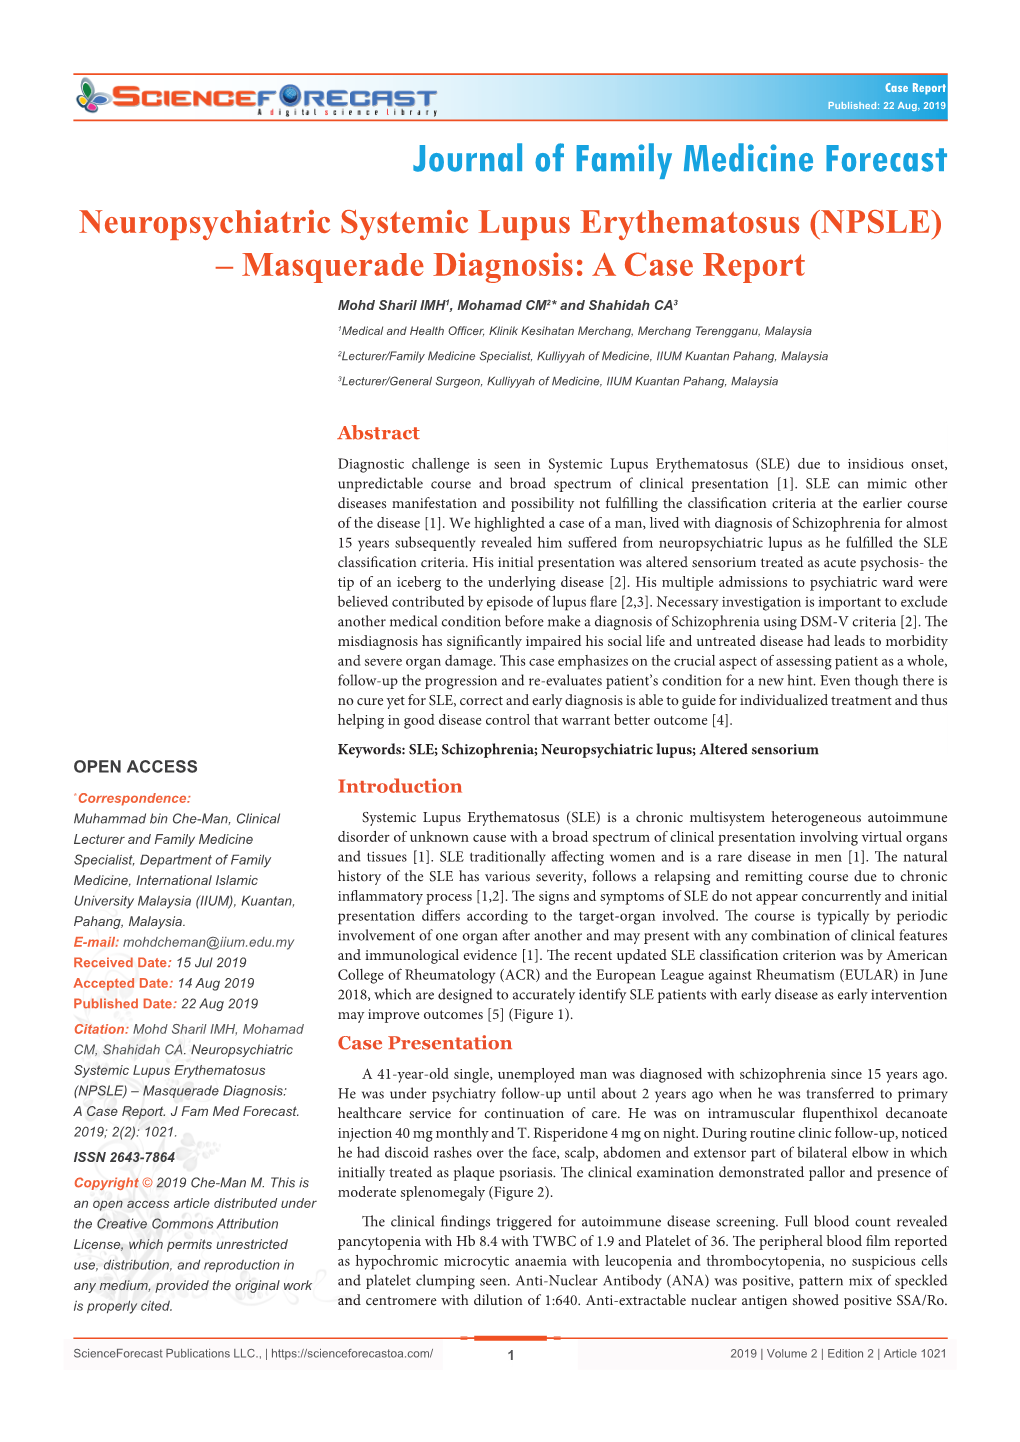 Neuropsychiatric Systemic Lupus Erythematosus (NPSLE) – Masquerade Diagnosis: a Case Report